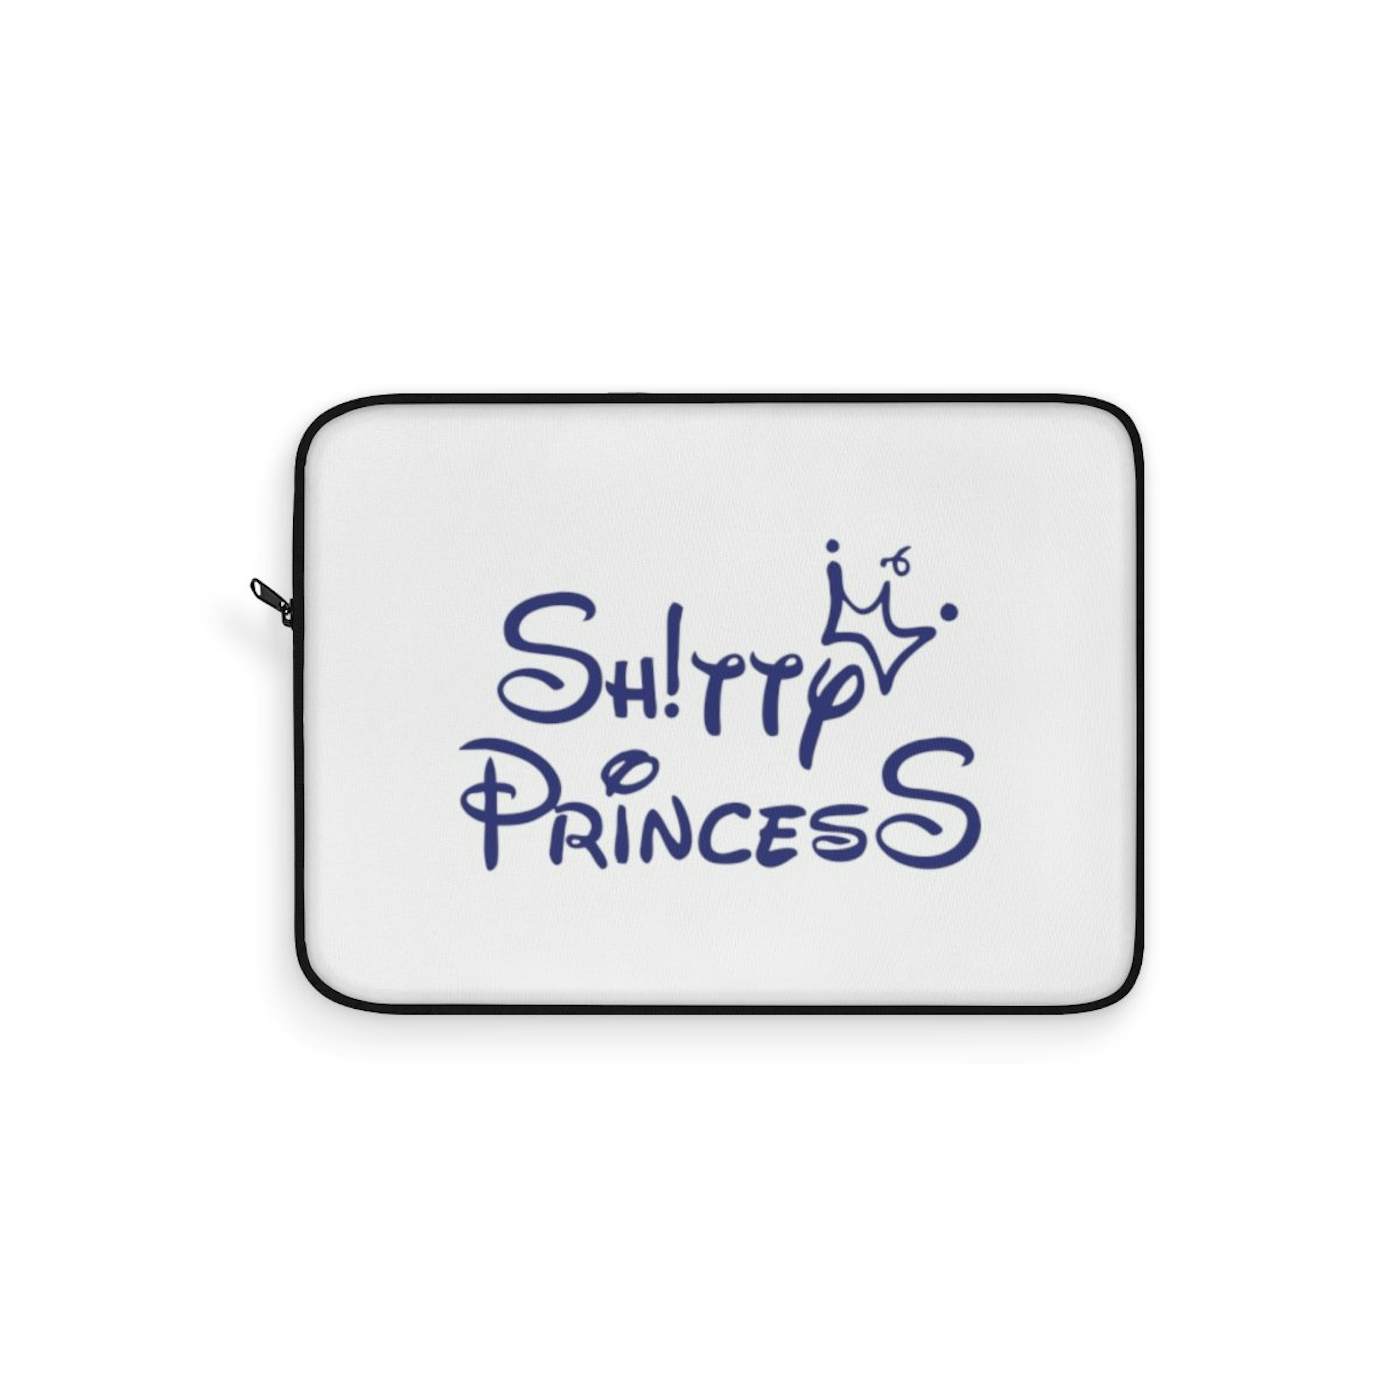 Laptop Sleeve Shitty Princess Navy OG Logo